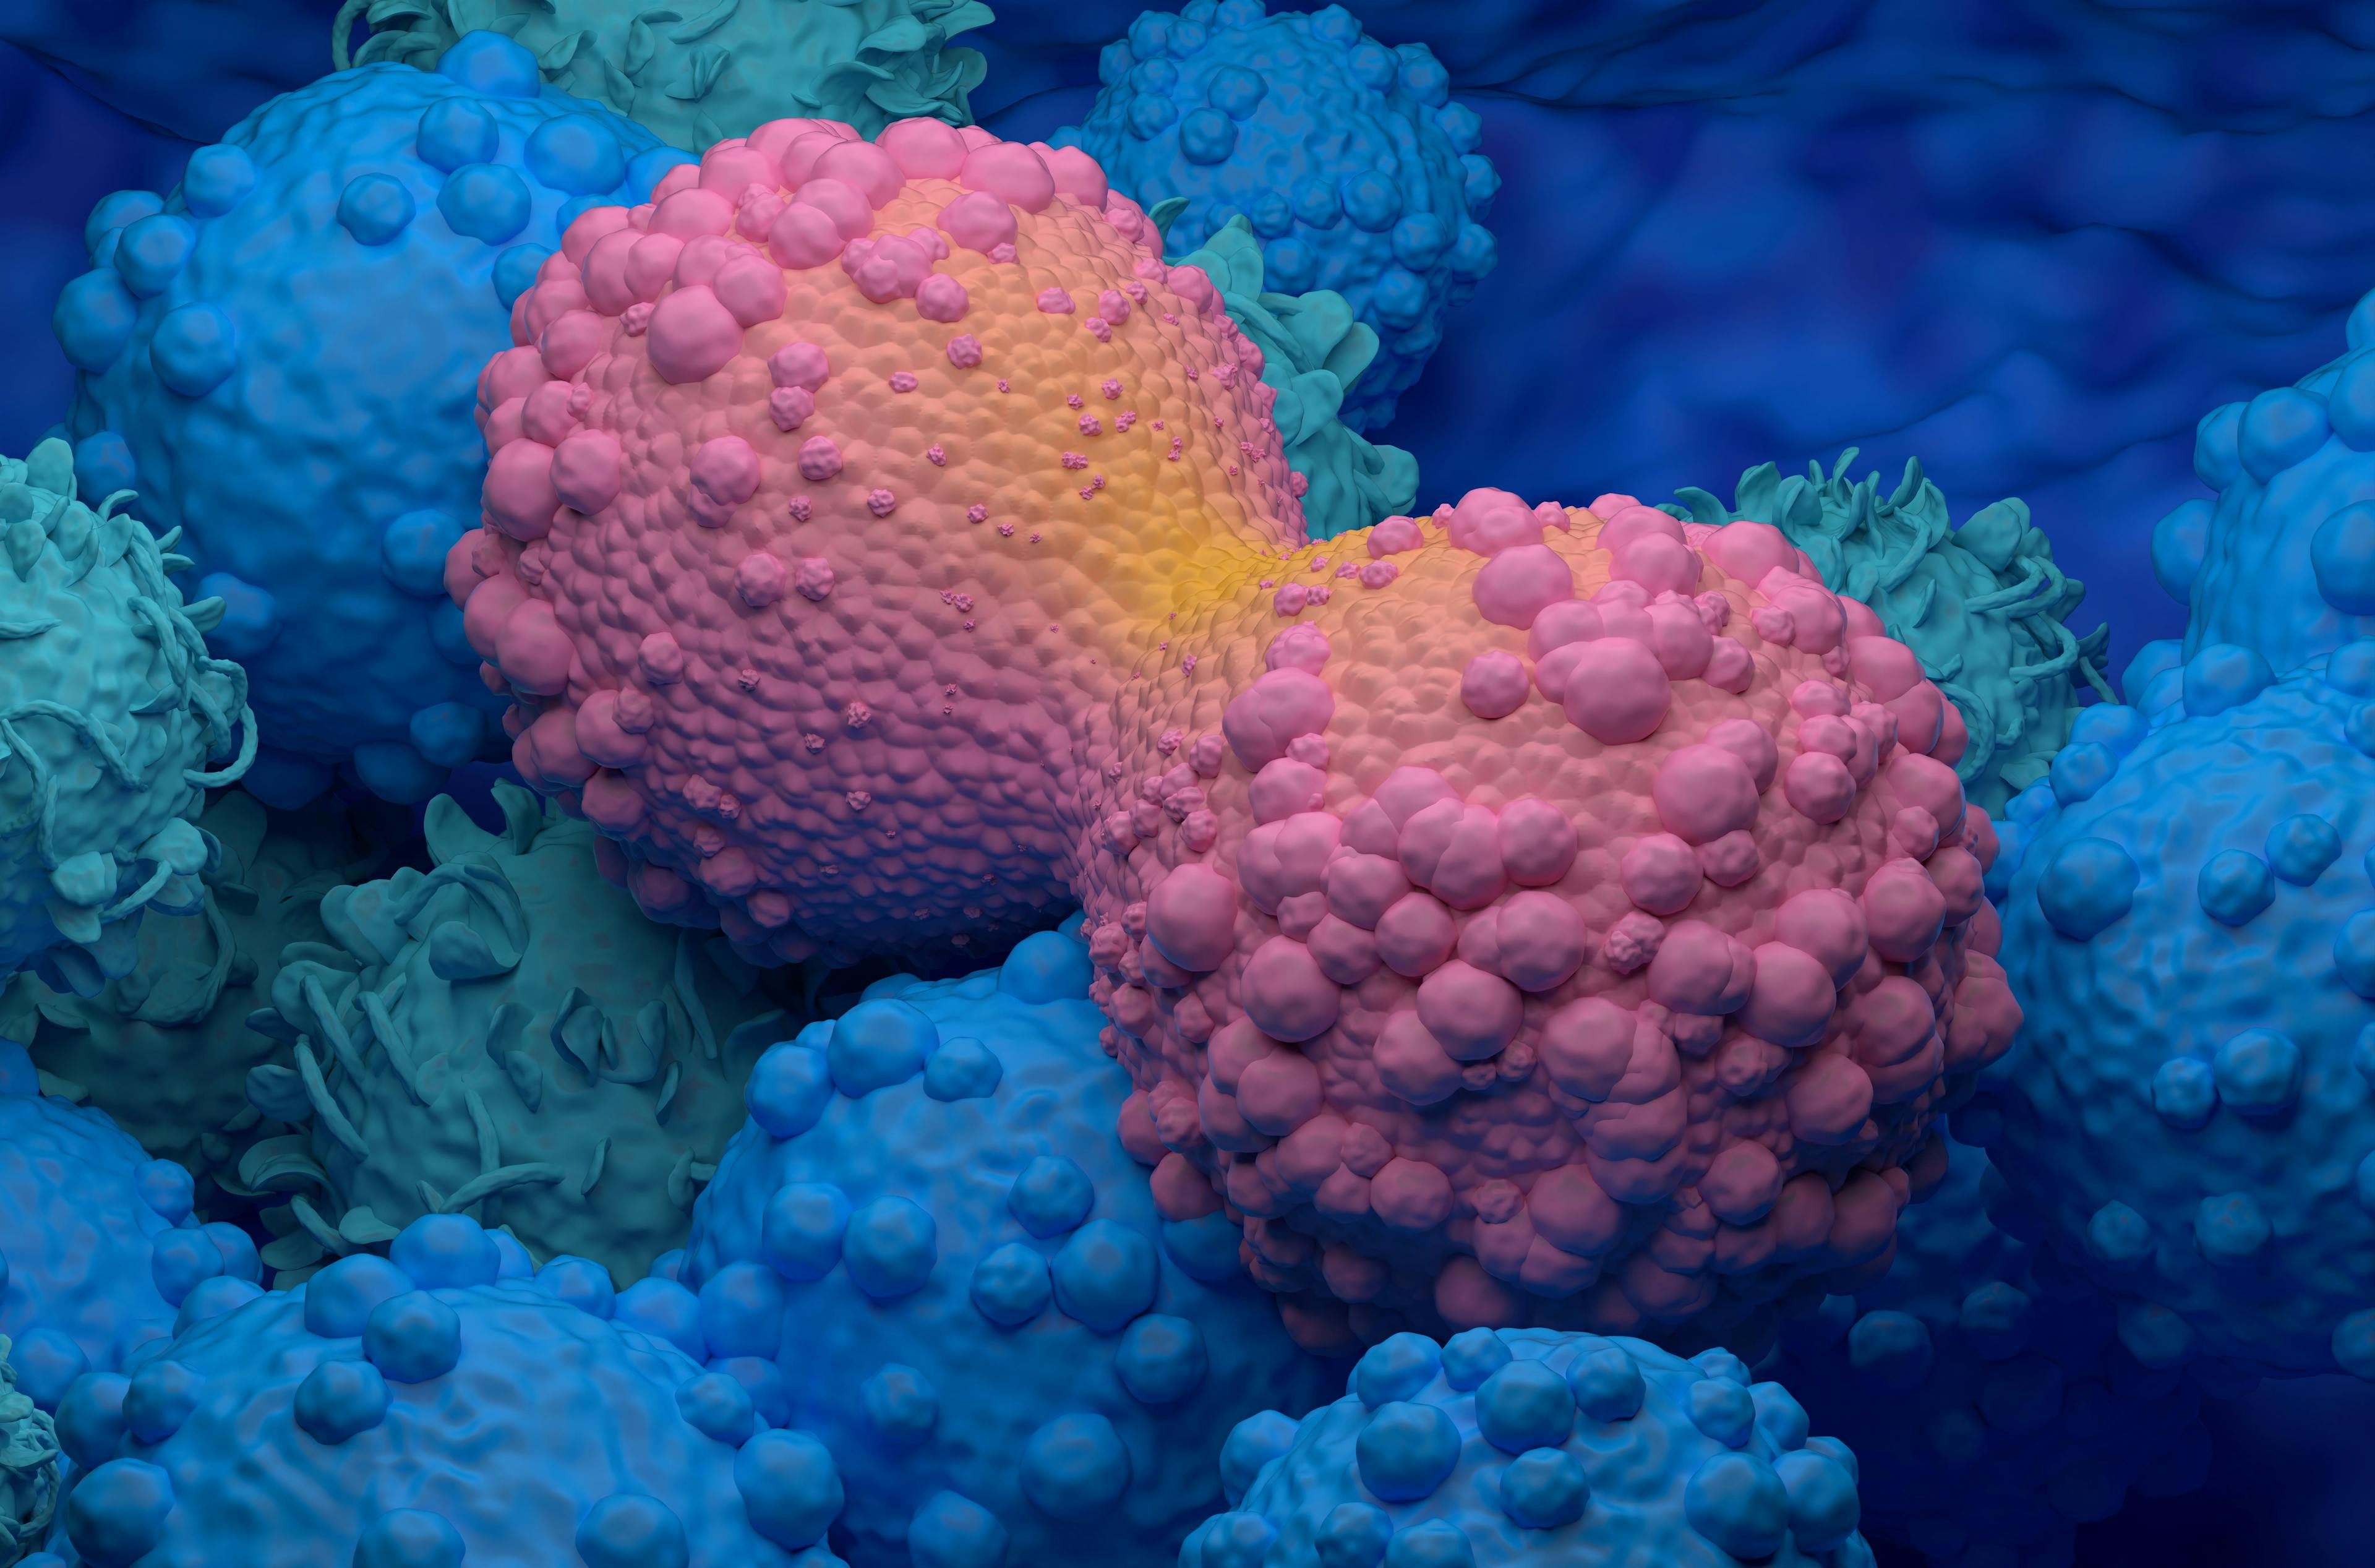 Image credit: LASZLO | stock.adobe.com. Dividing breast cancer cell closeup view 3d illustration